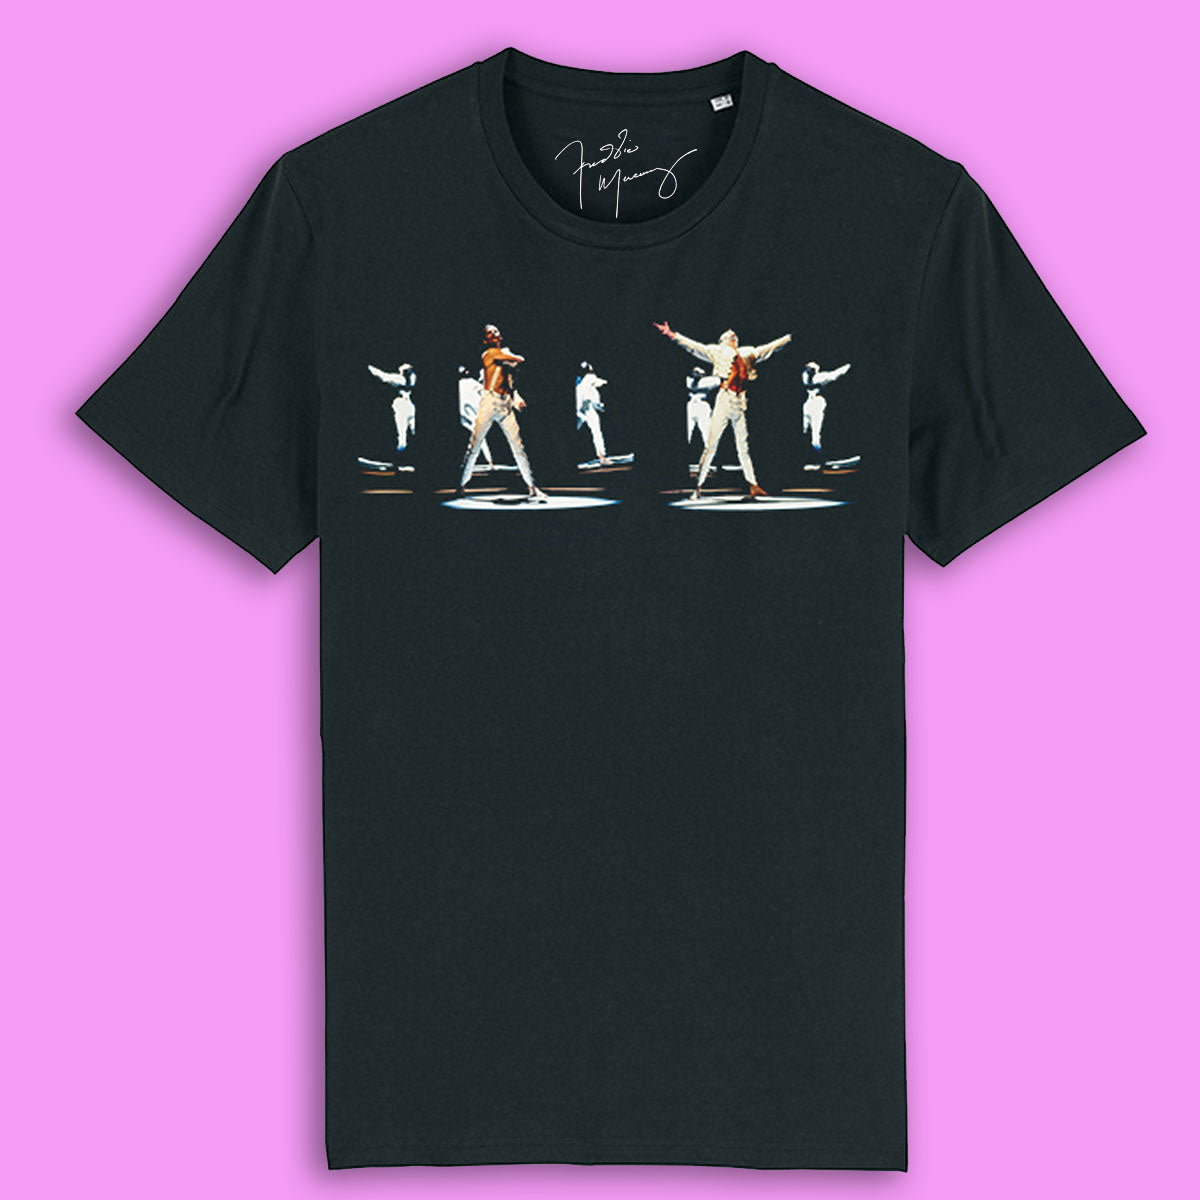 Freddie Mercury - Freddie Mercury Ballerina T-Shirt.